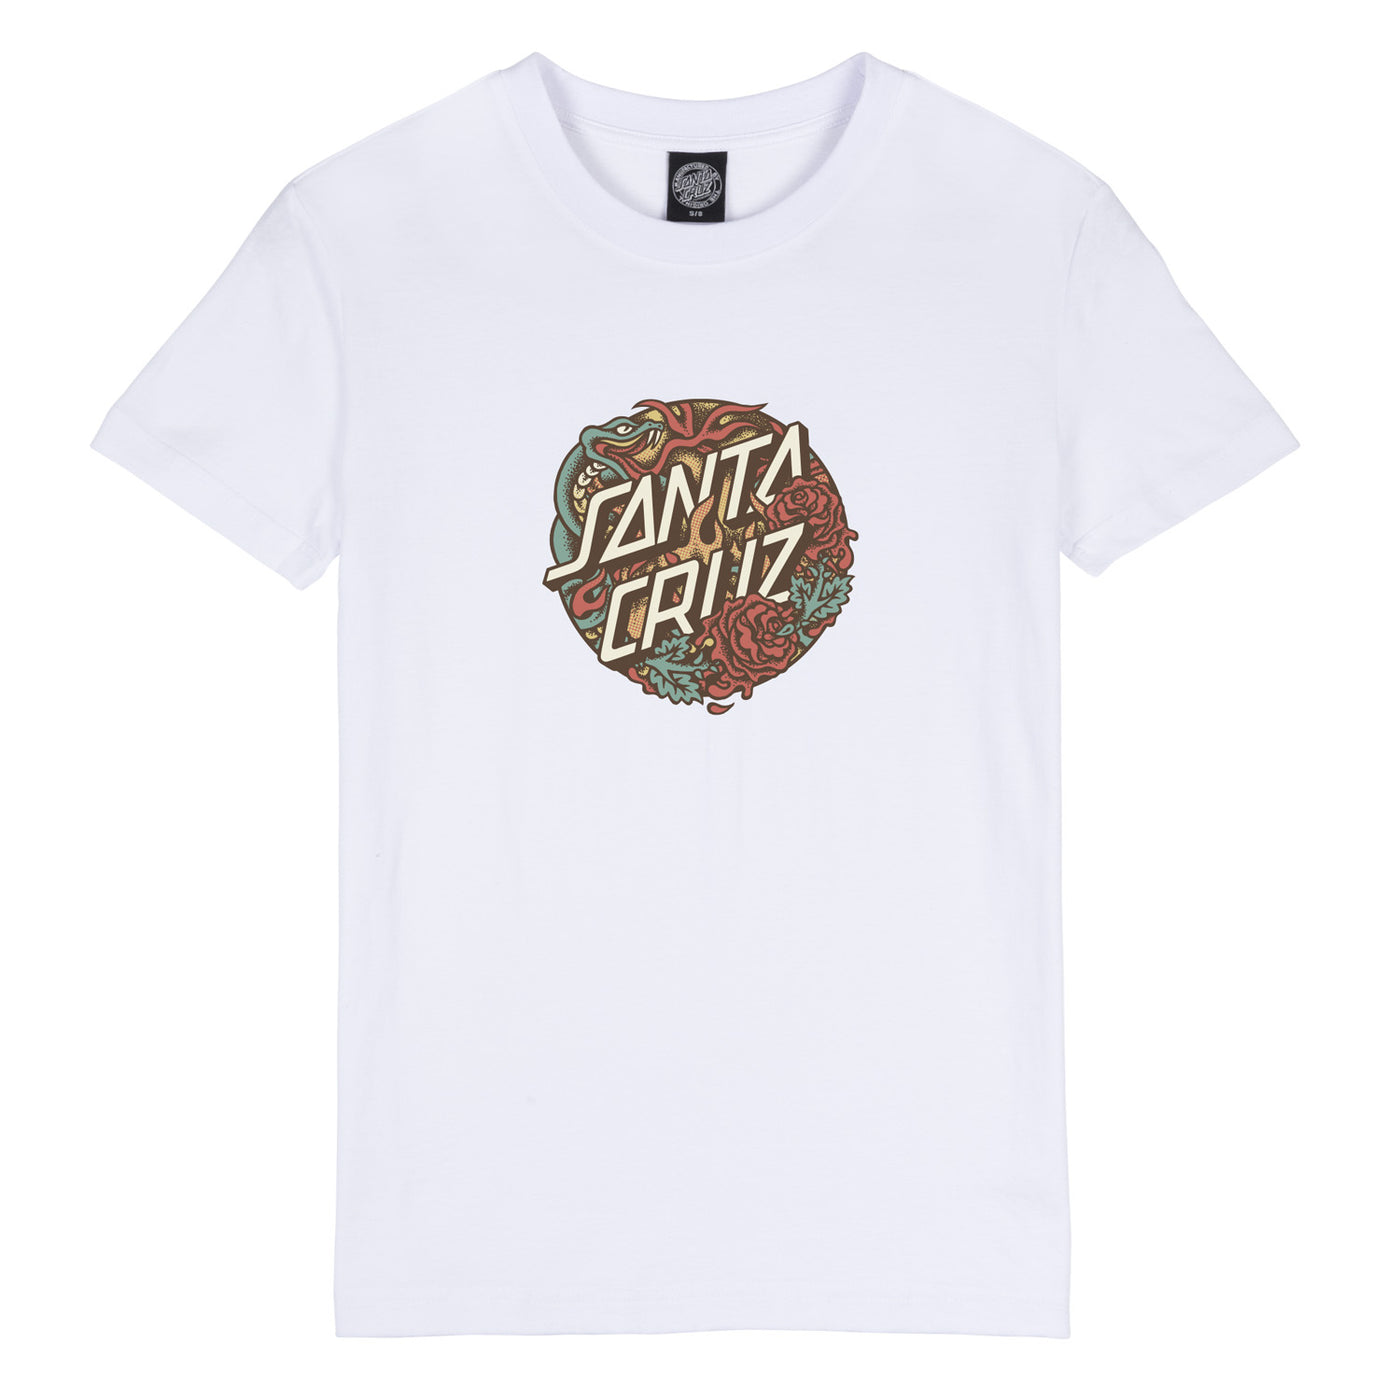 Santa Cruz Dressen Sanke Front T-Shirt Tee - White